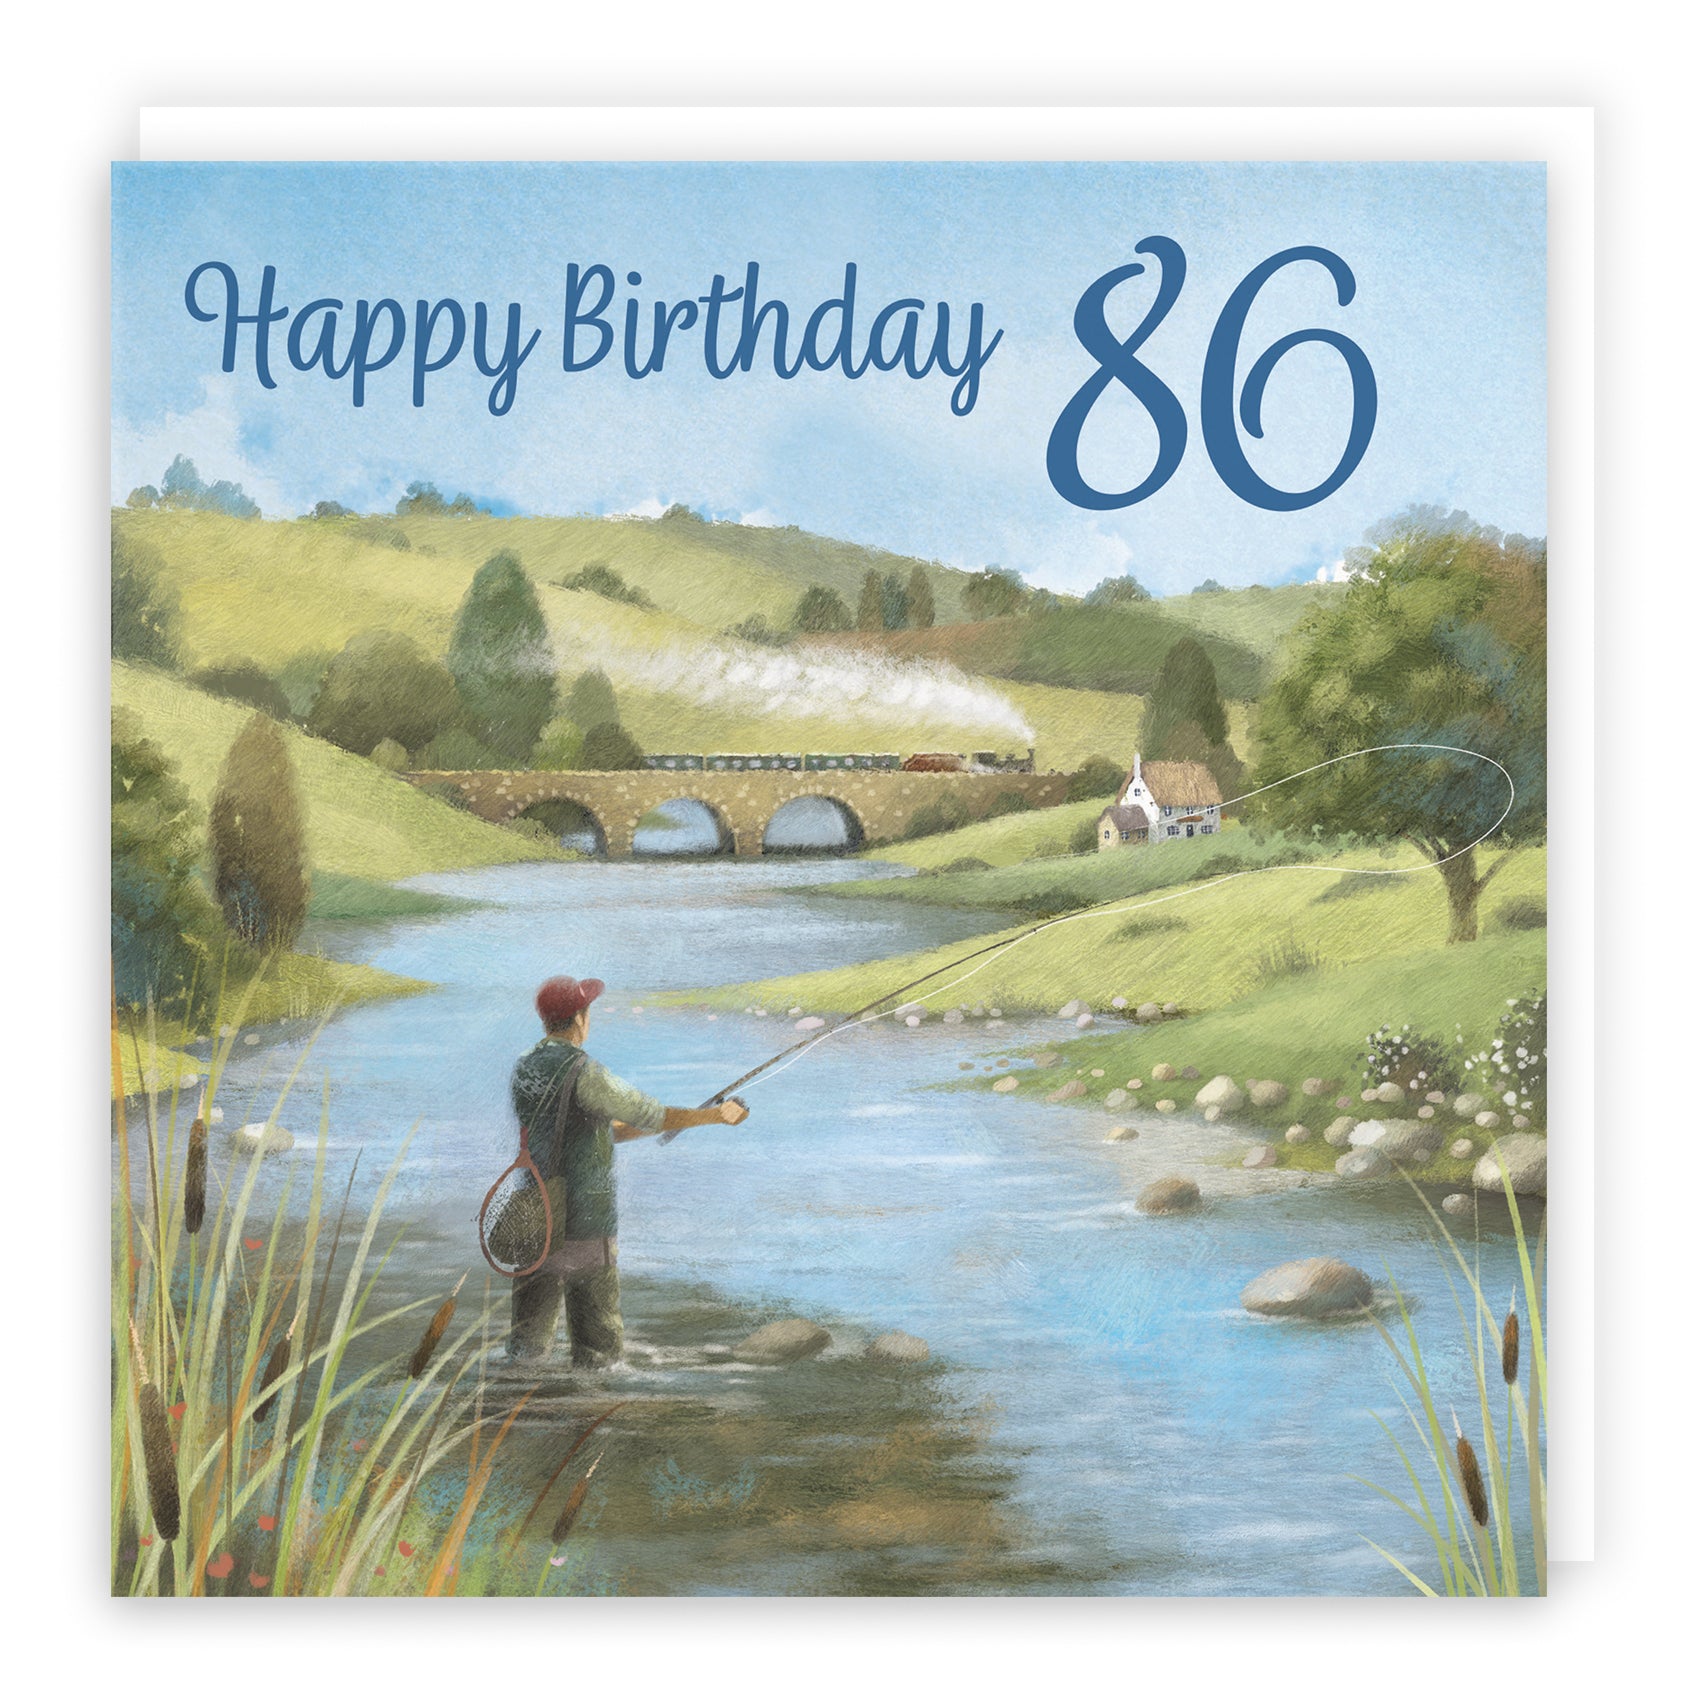 86th Birthday Cards - Age 86